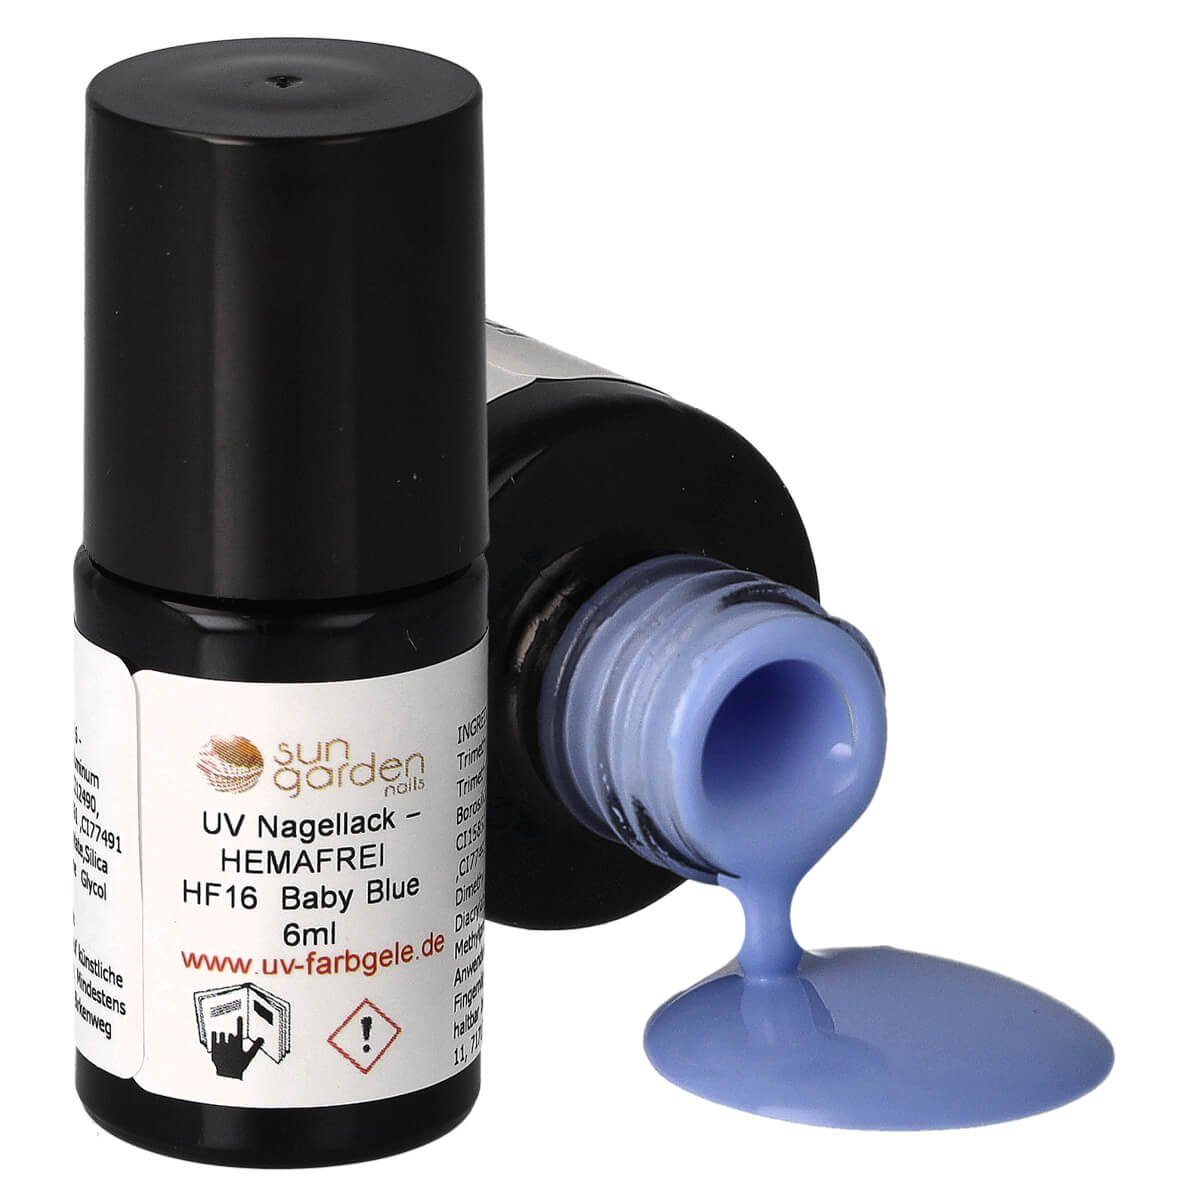 UV Nails - Baby Nagellack Garden 6ml Nagellack – Sun HF16 Blue HEMAFREI